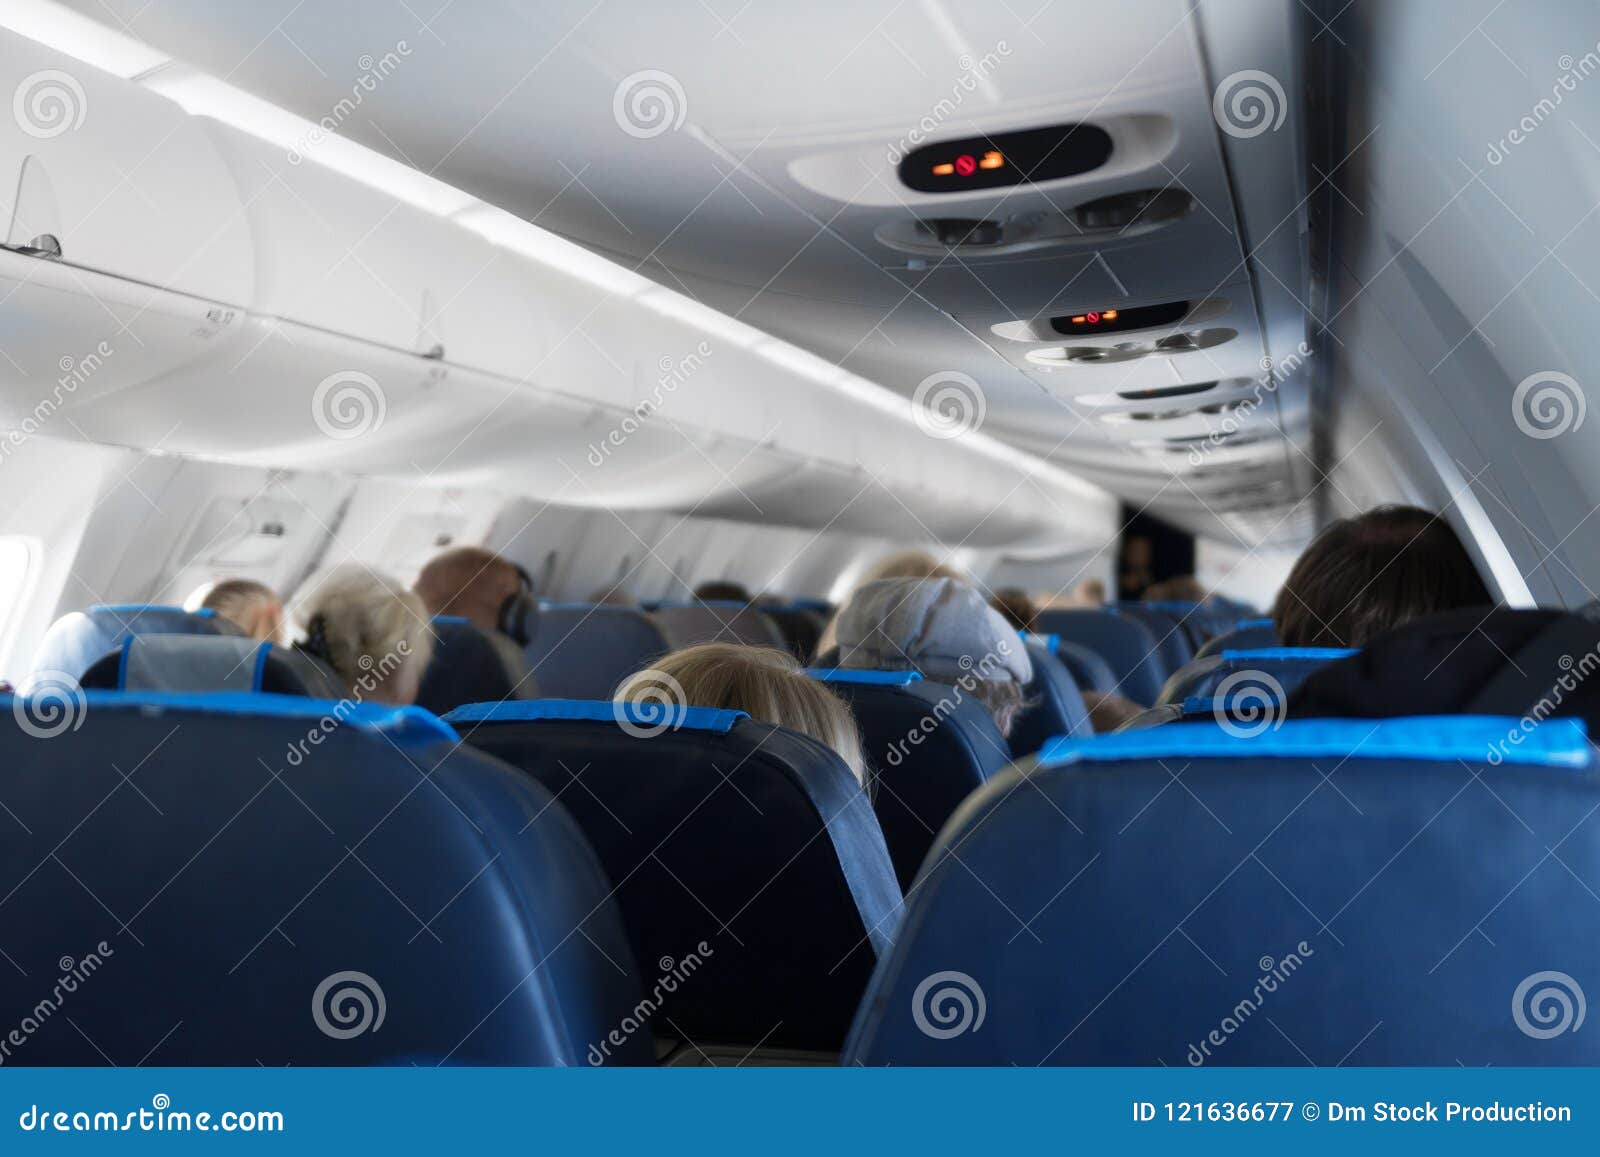 interior inside of the plane.